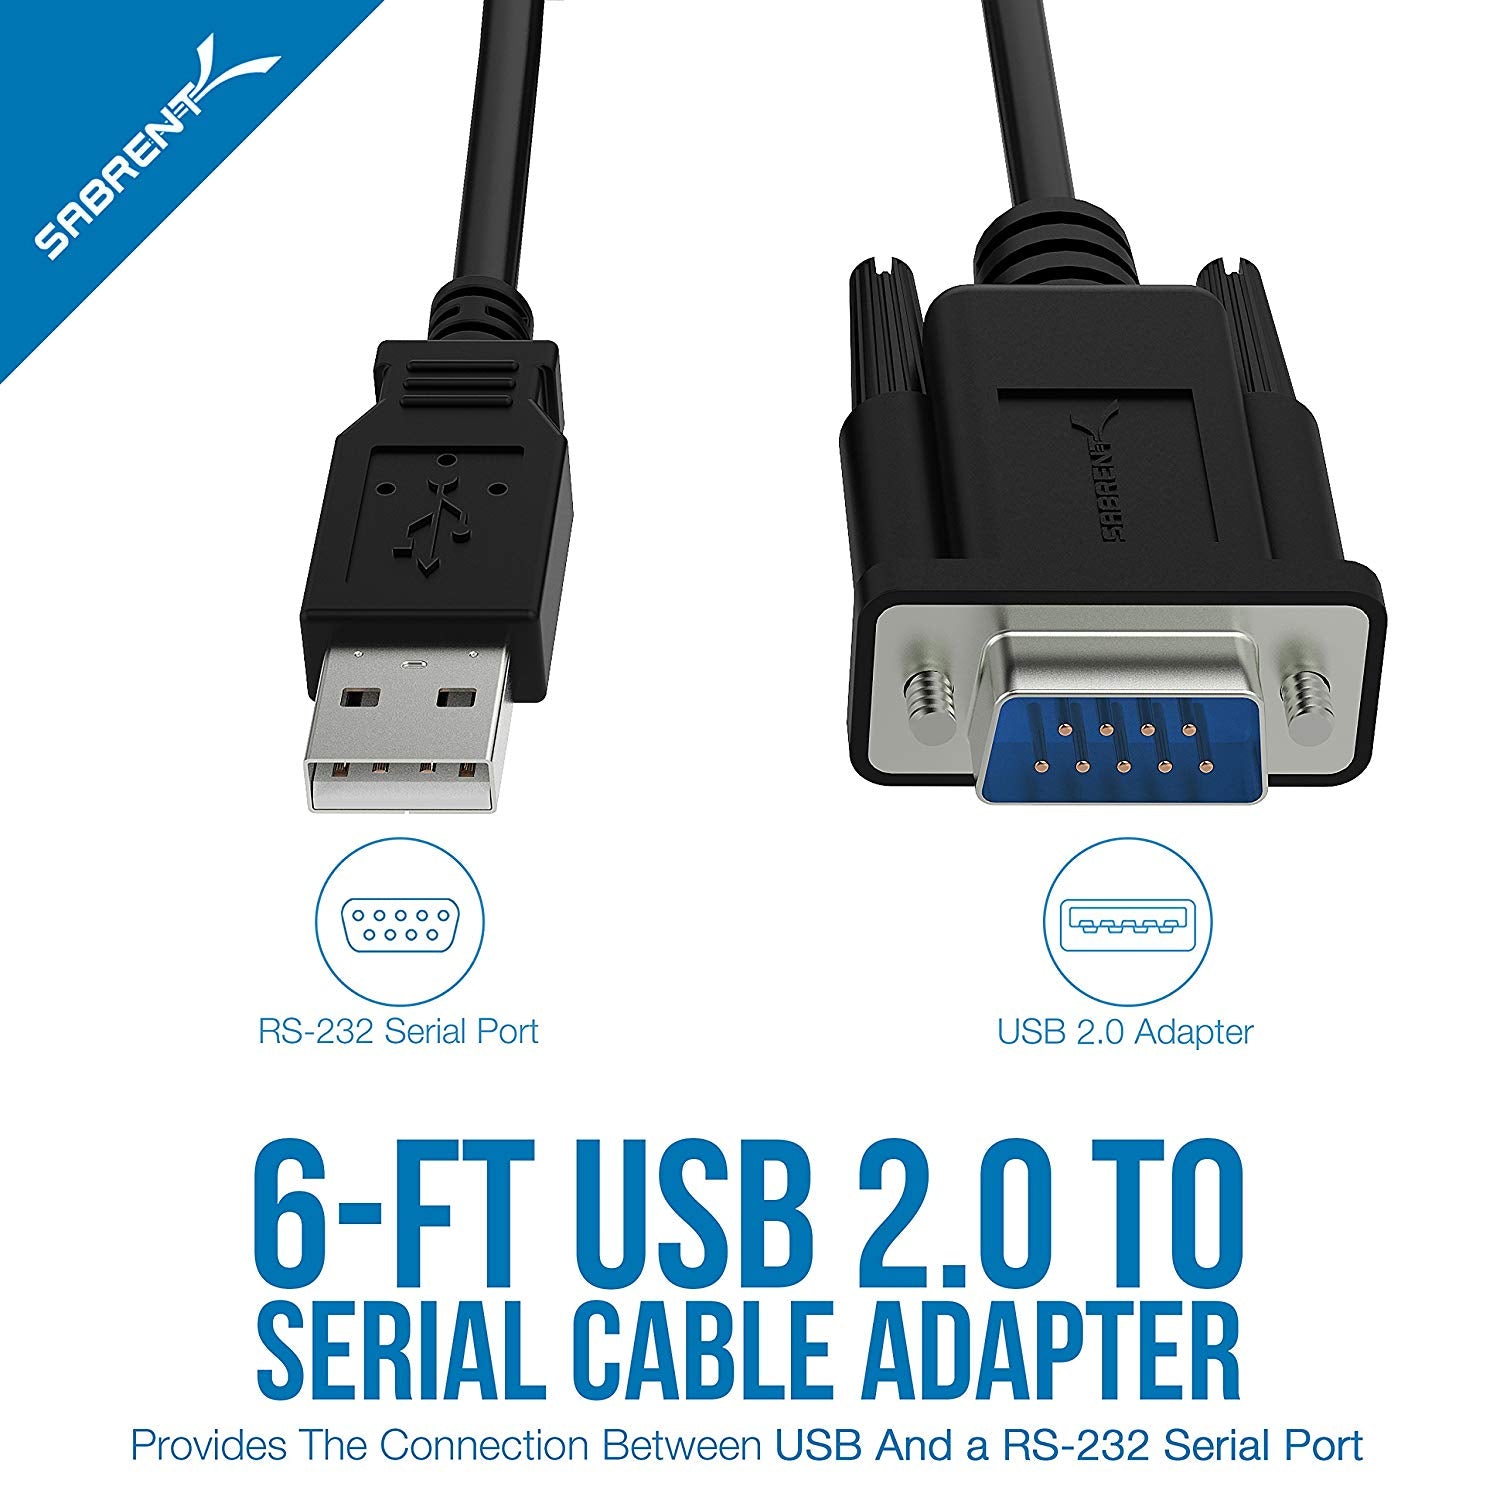 Описание: Адаптер USB-RS232